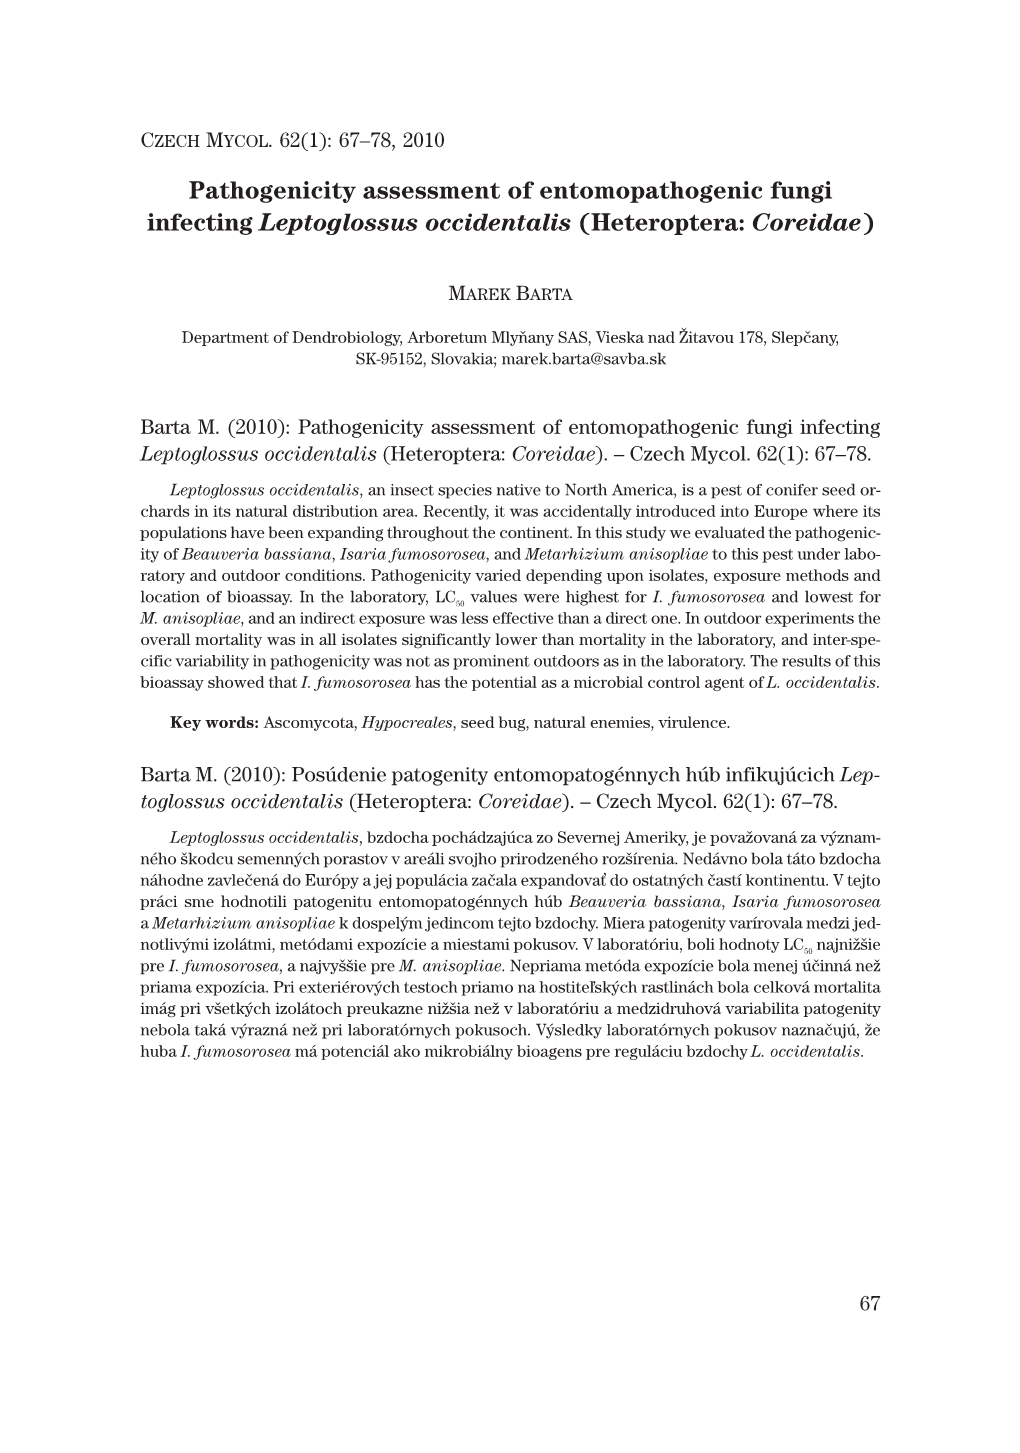 Pathogenicity Assessment of Entomopathogenic Fungi Infecting Leptoglossus Occidentalis (Heteroptera: Coreidae)